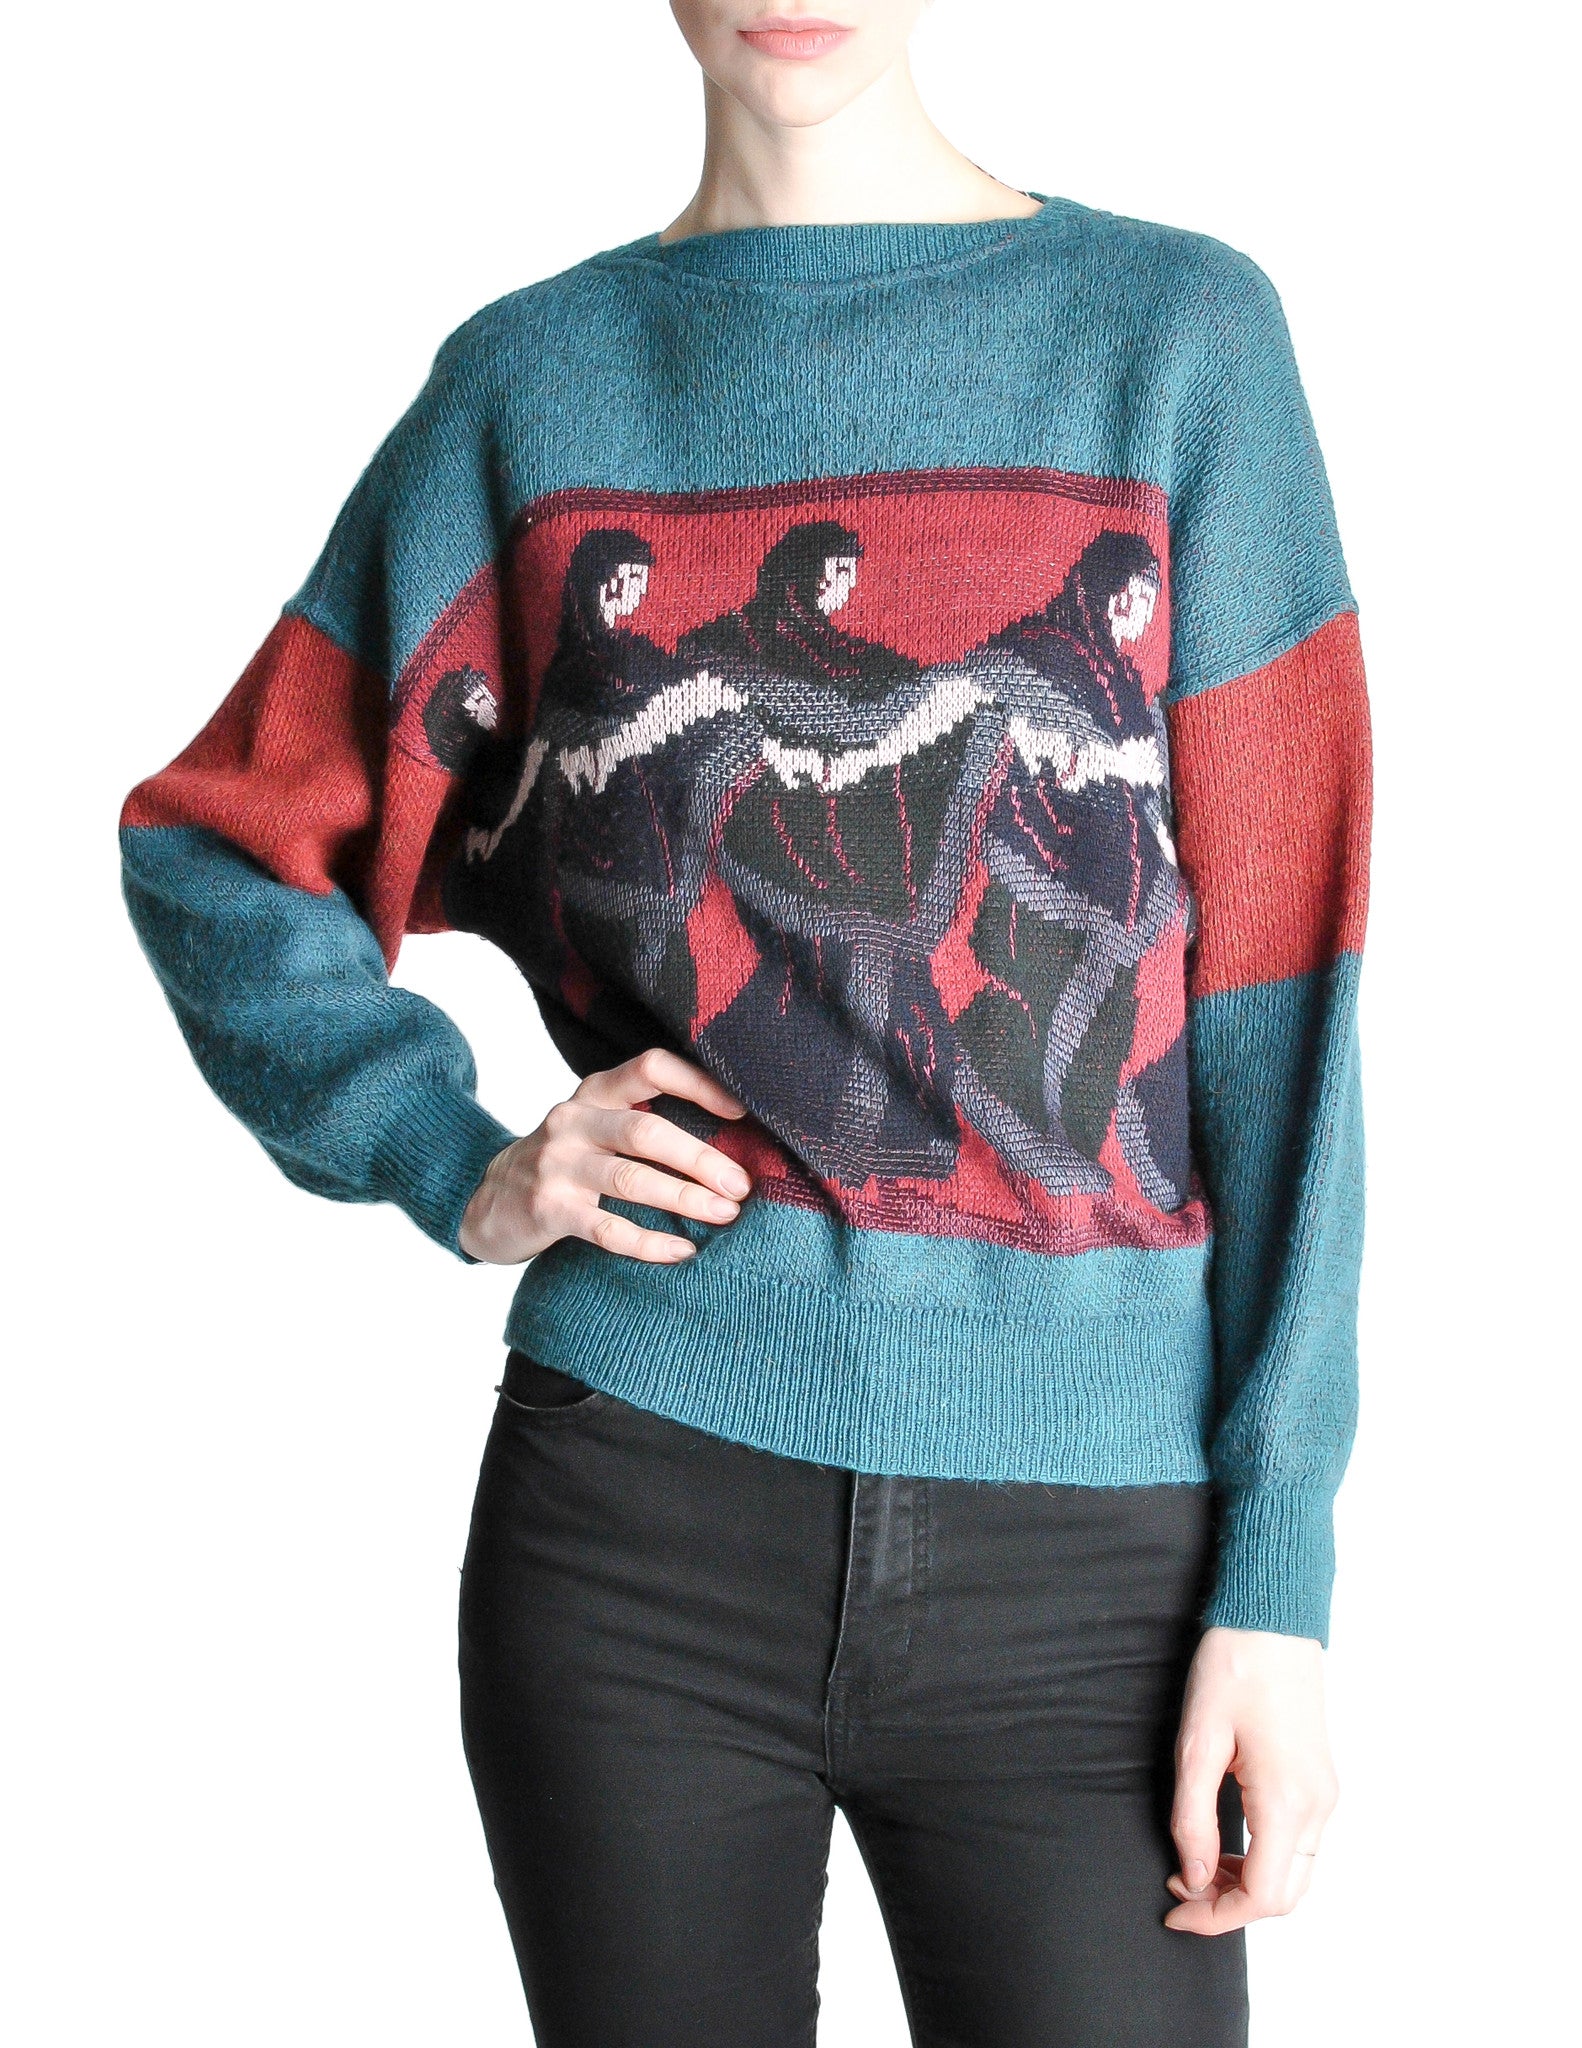 versace vintage sweater